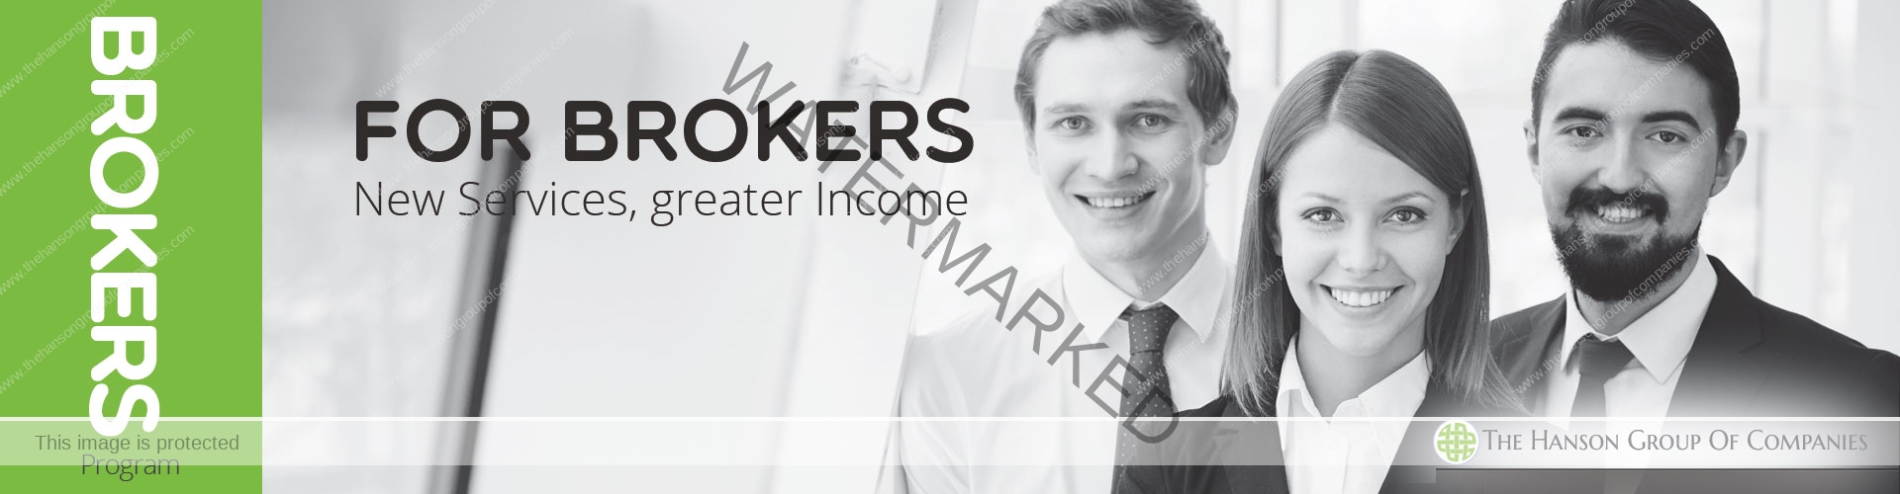 brokers-program-resize